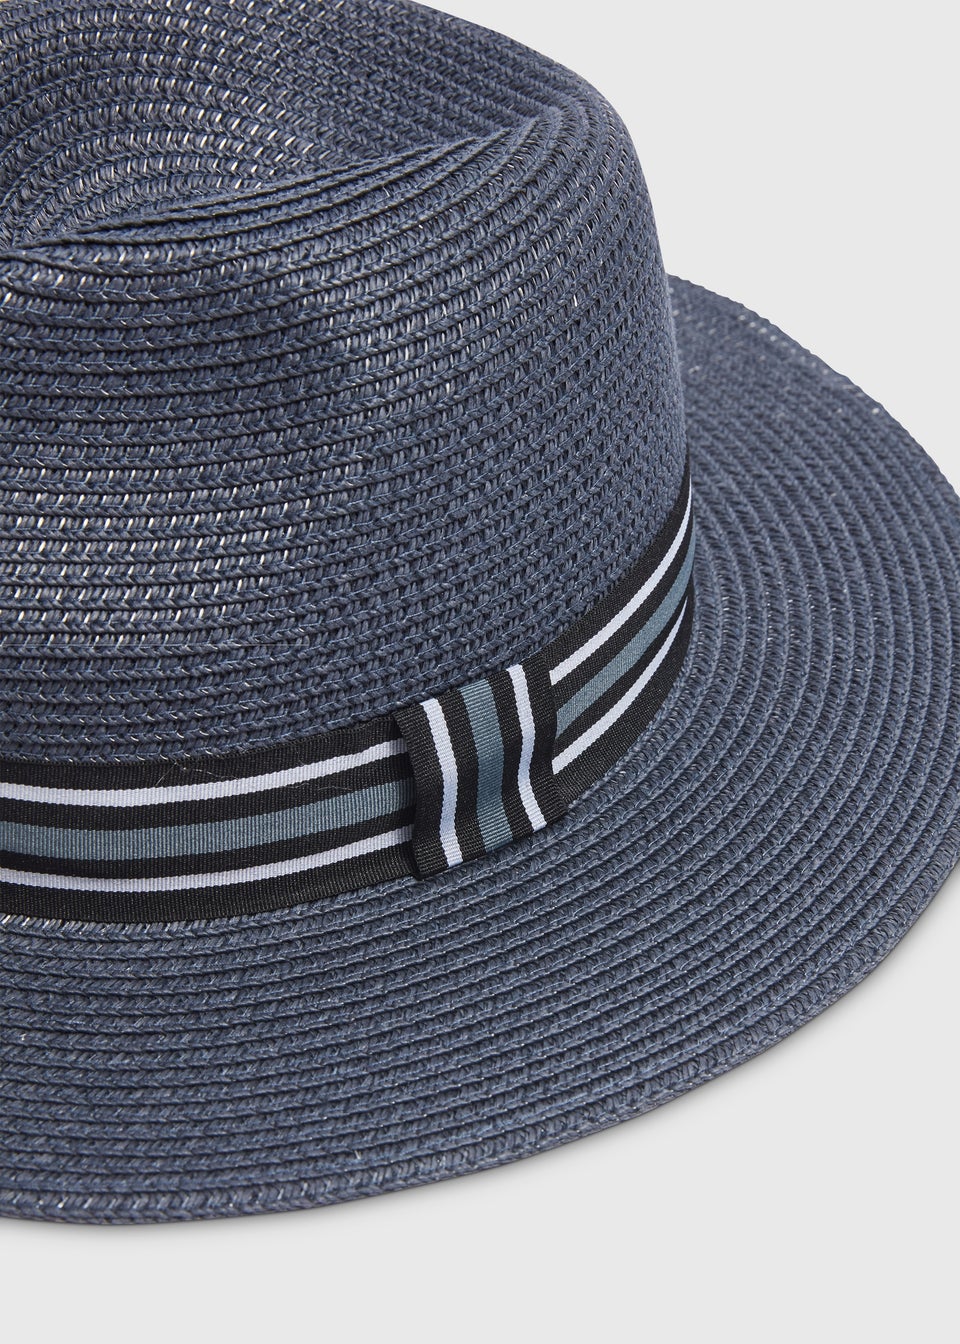 Navy Stripe Panama Hat